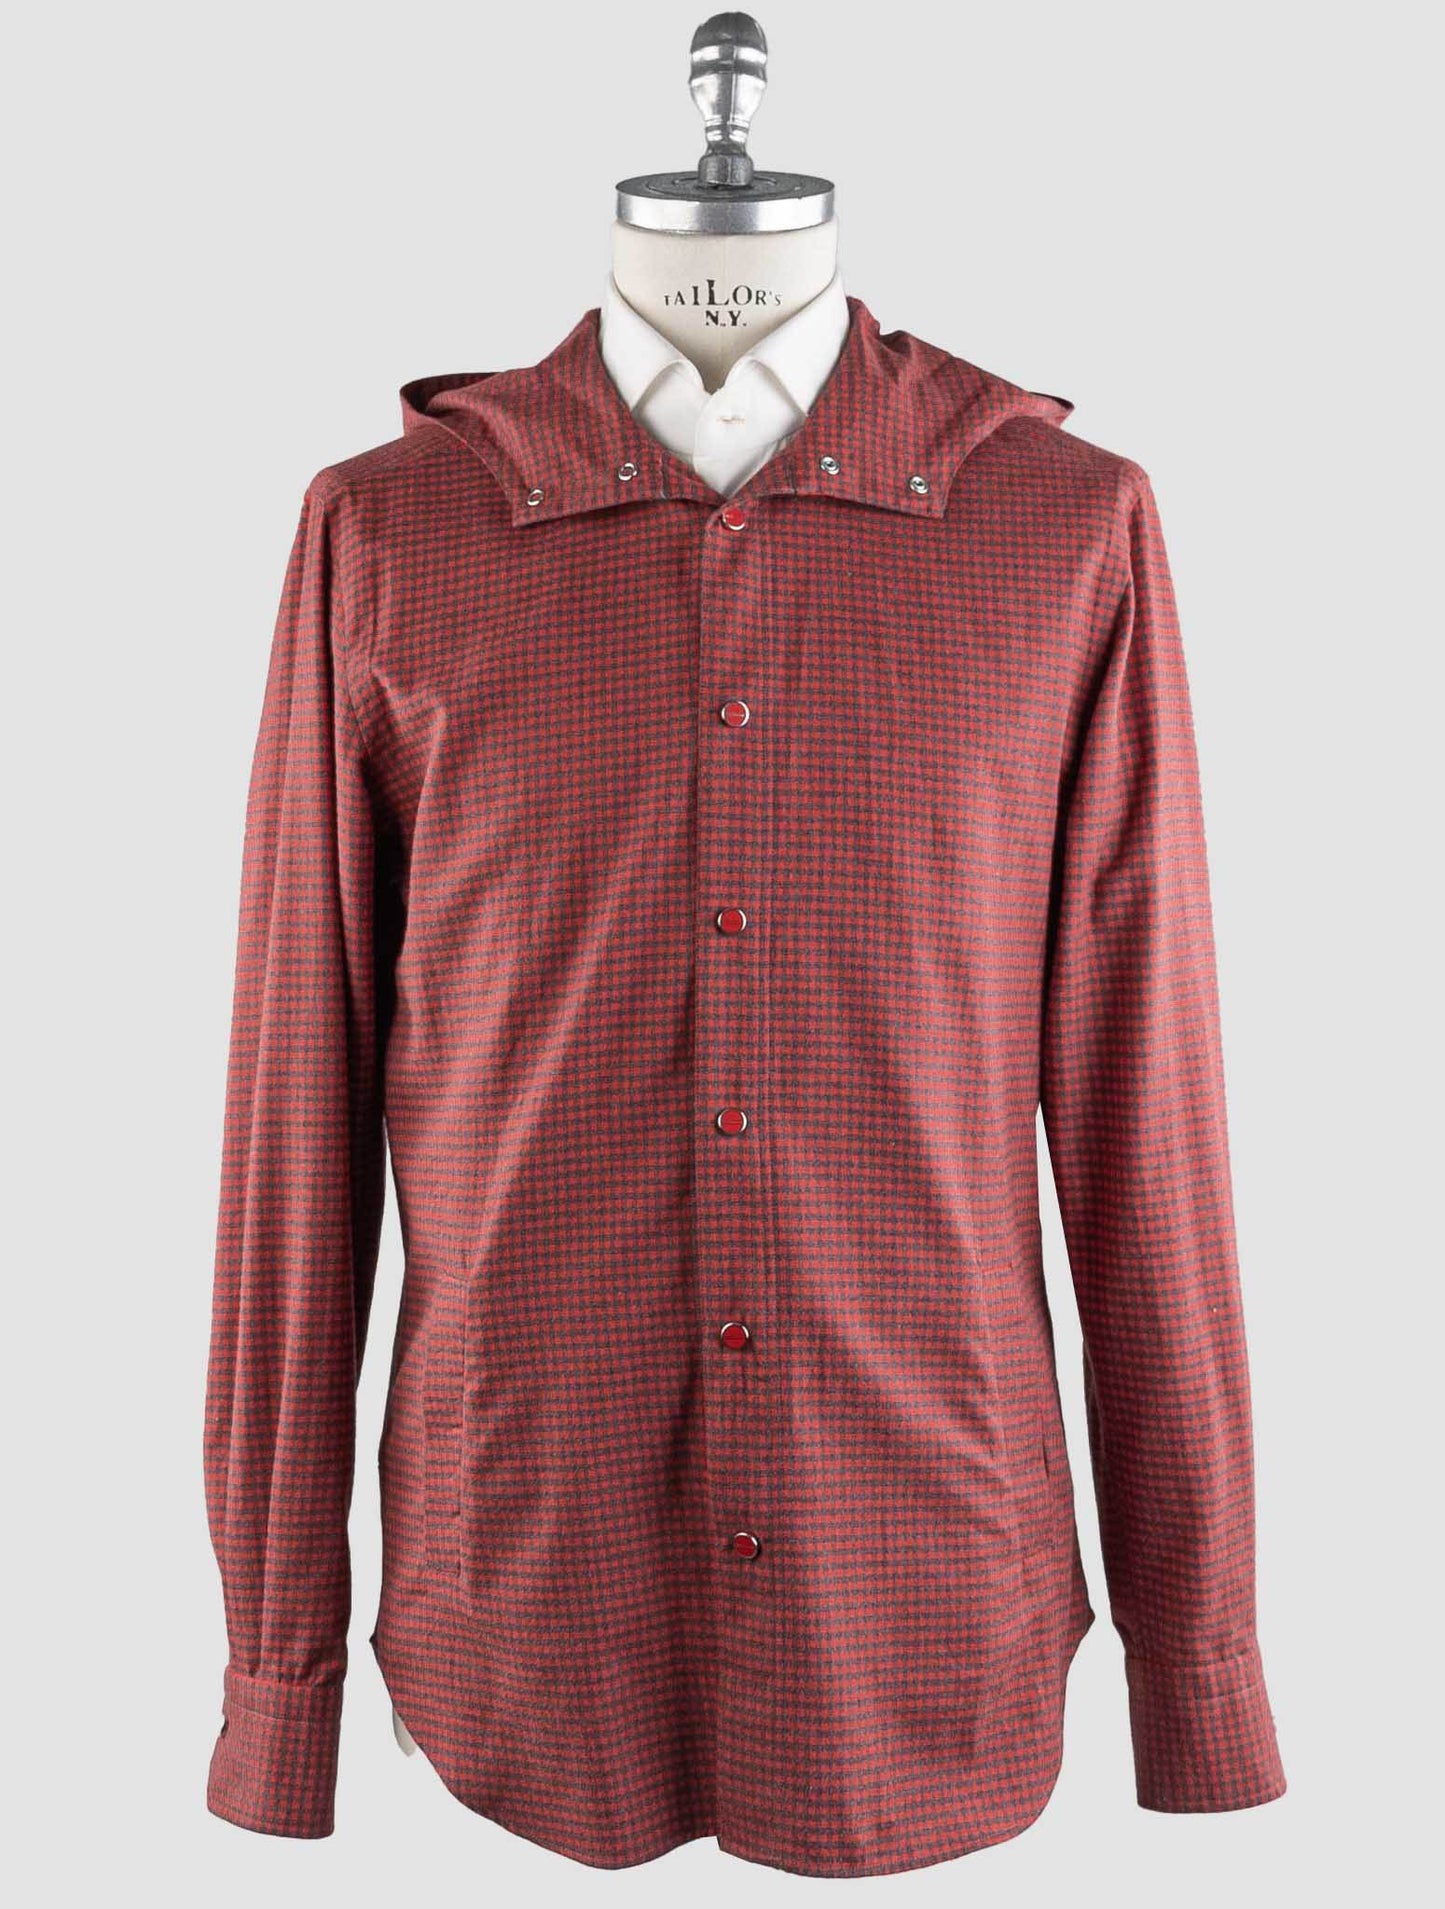 Kiton Red Gray Cotton Shirt Mariano